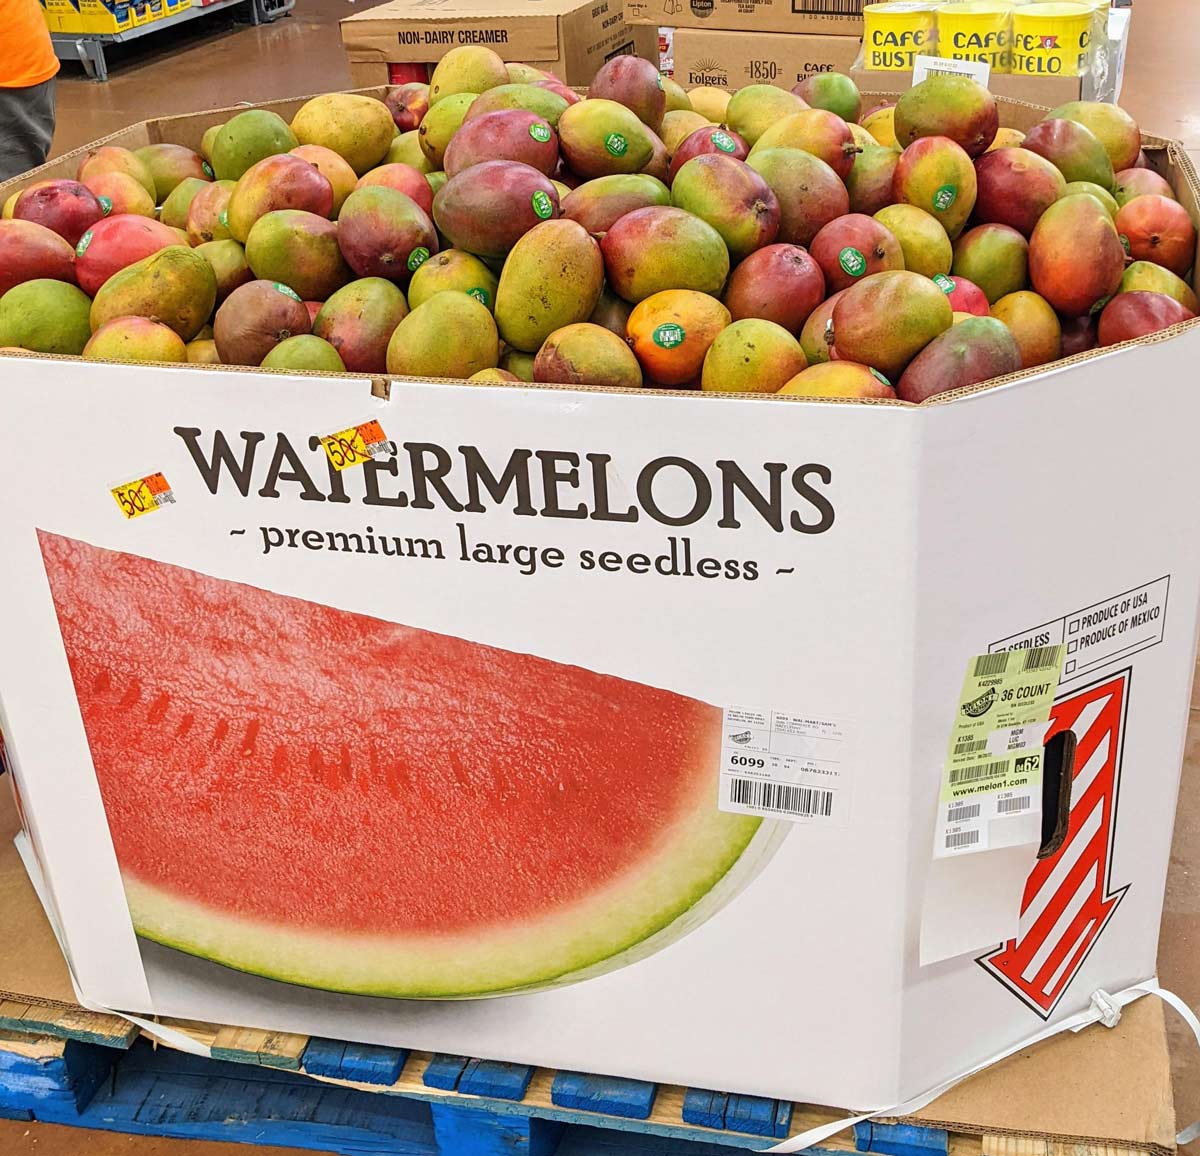 Walmart Watermelons!